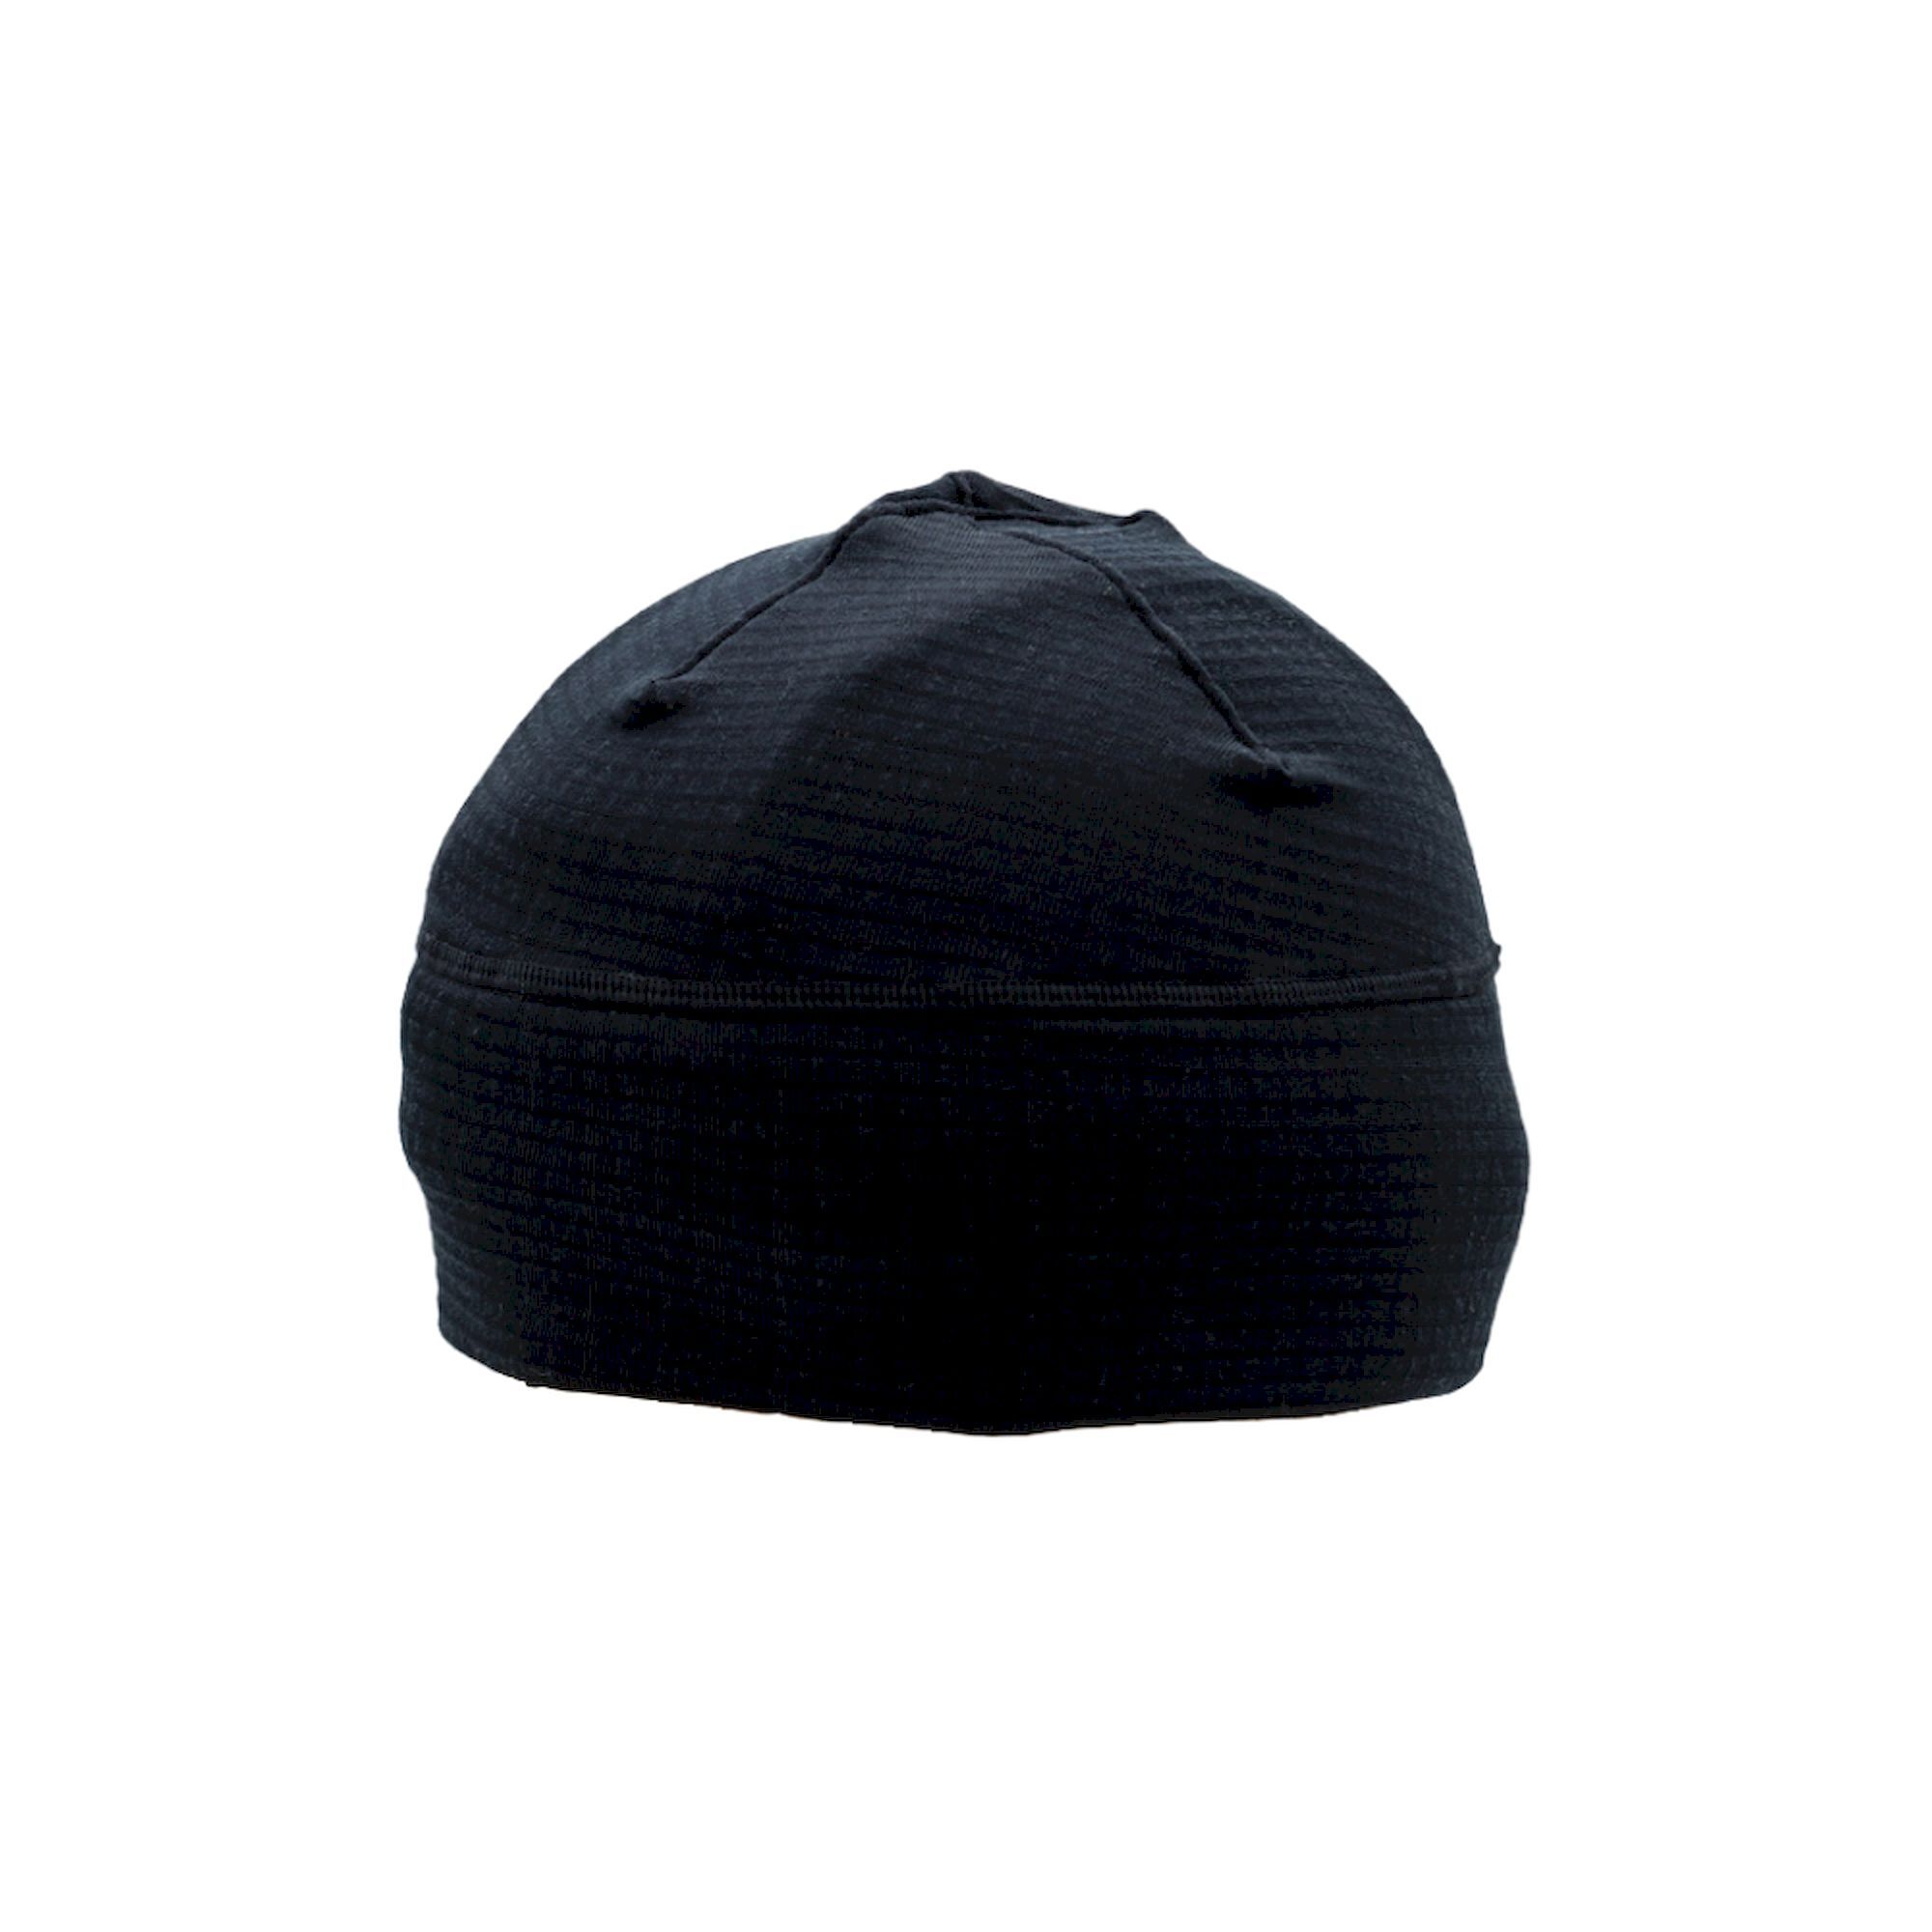 PAG Neckwear Technical Hat - Gorro